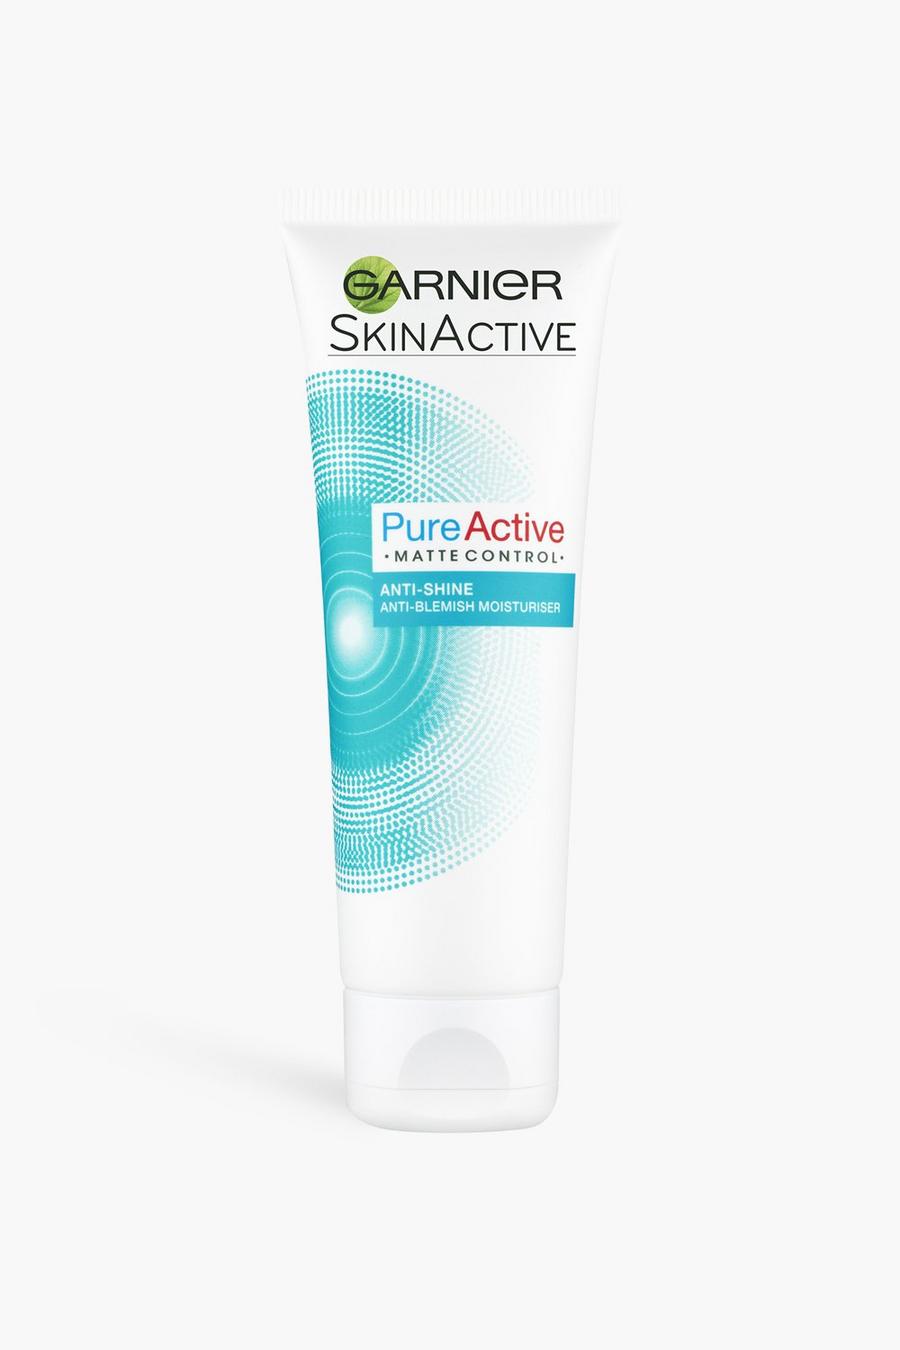 White Garnier Pure Active Matte Control Anti-Blemish Face Moisturiser 50ml